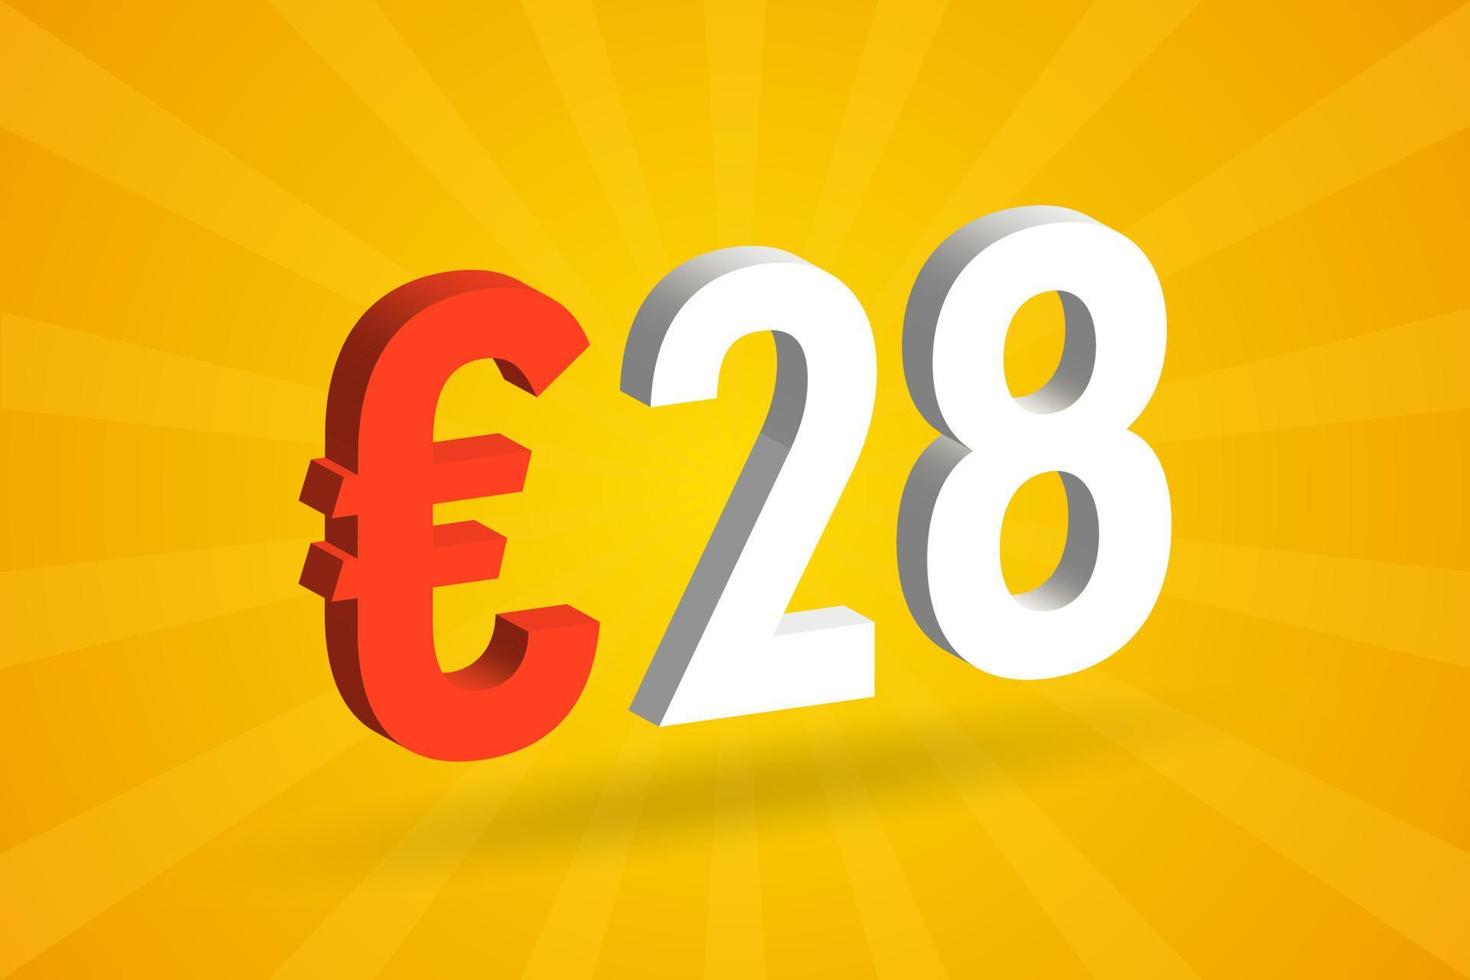 28 Euro Currency 3D vector text symbol. 3D 28 Euro European Union Money stock vector